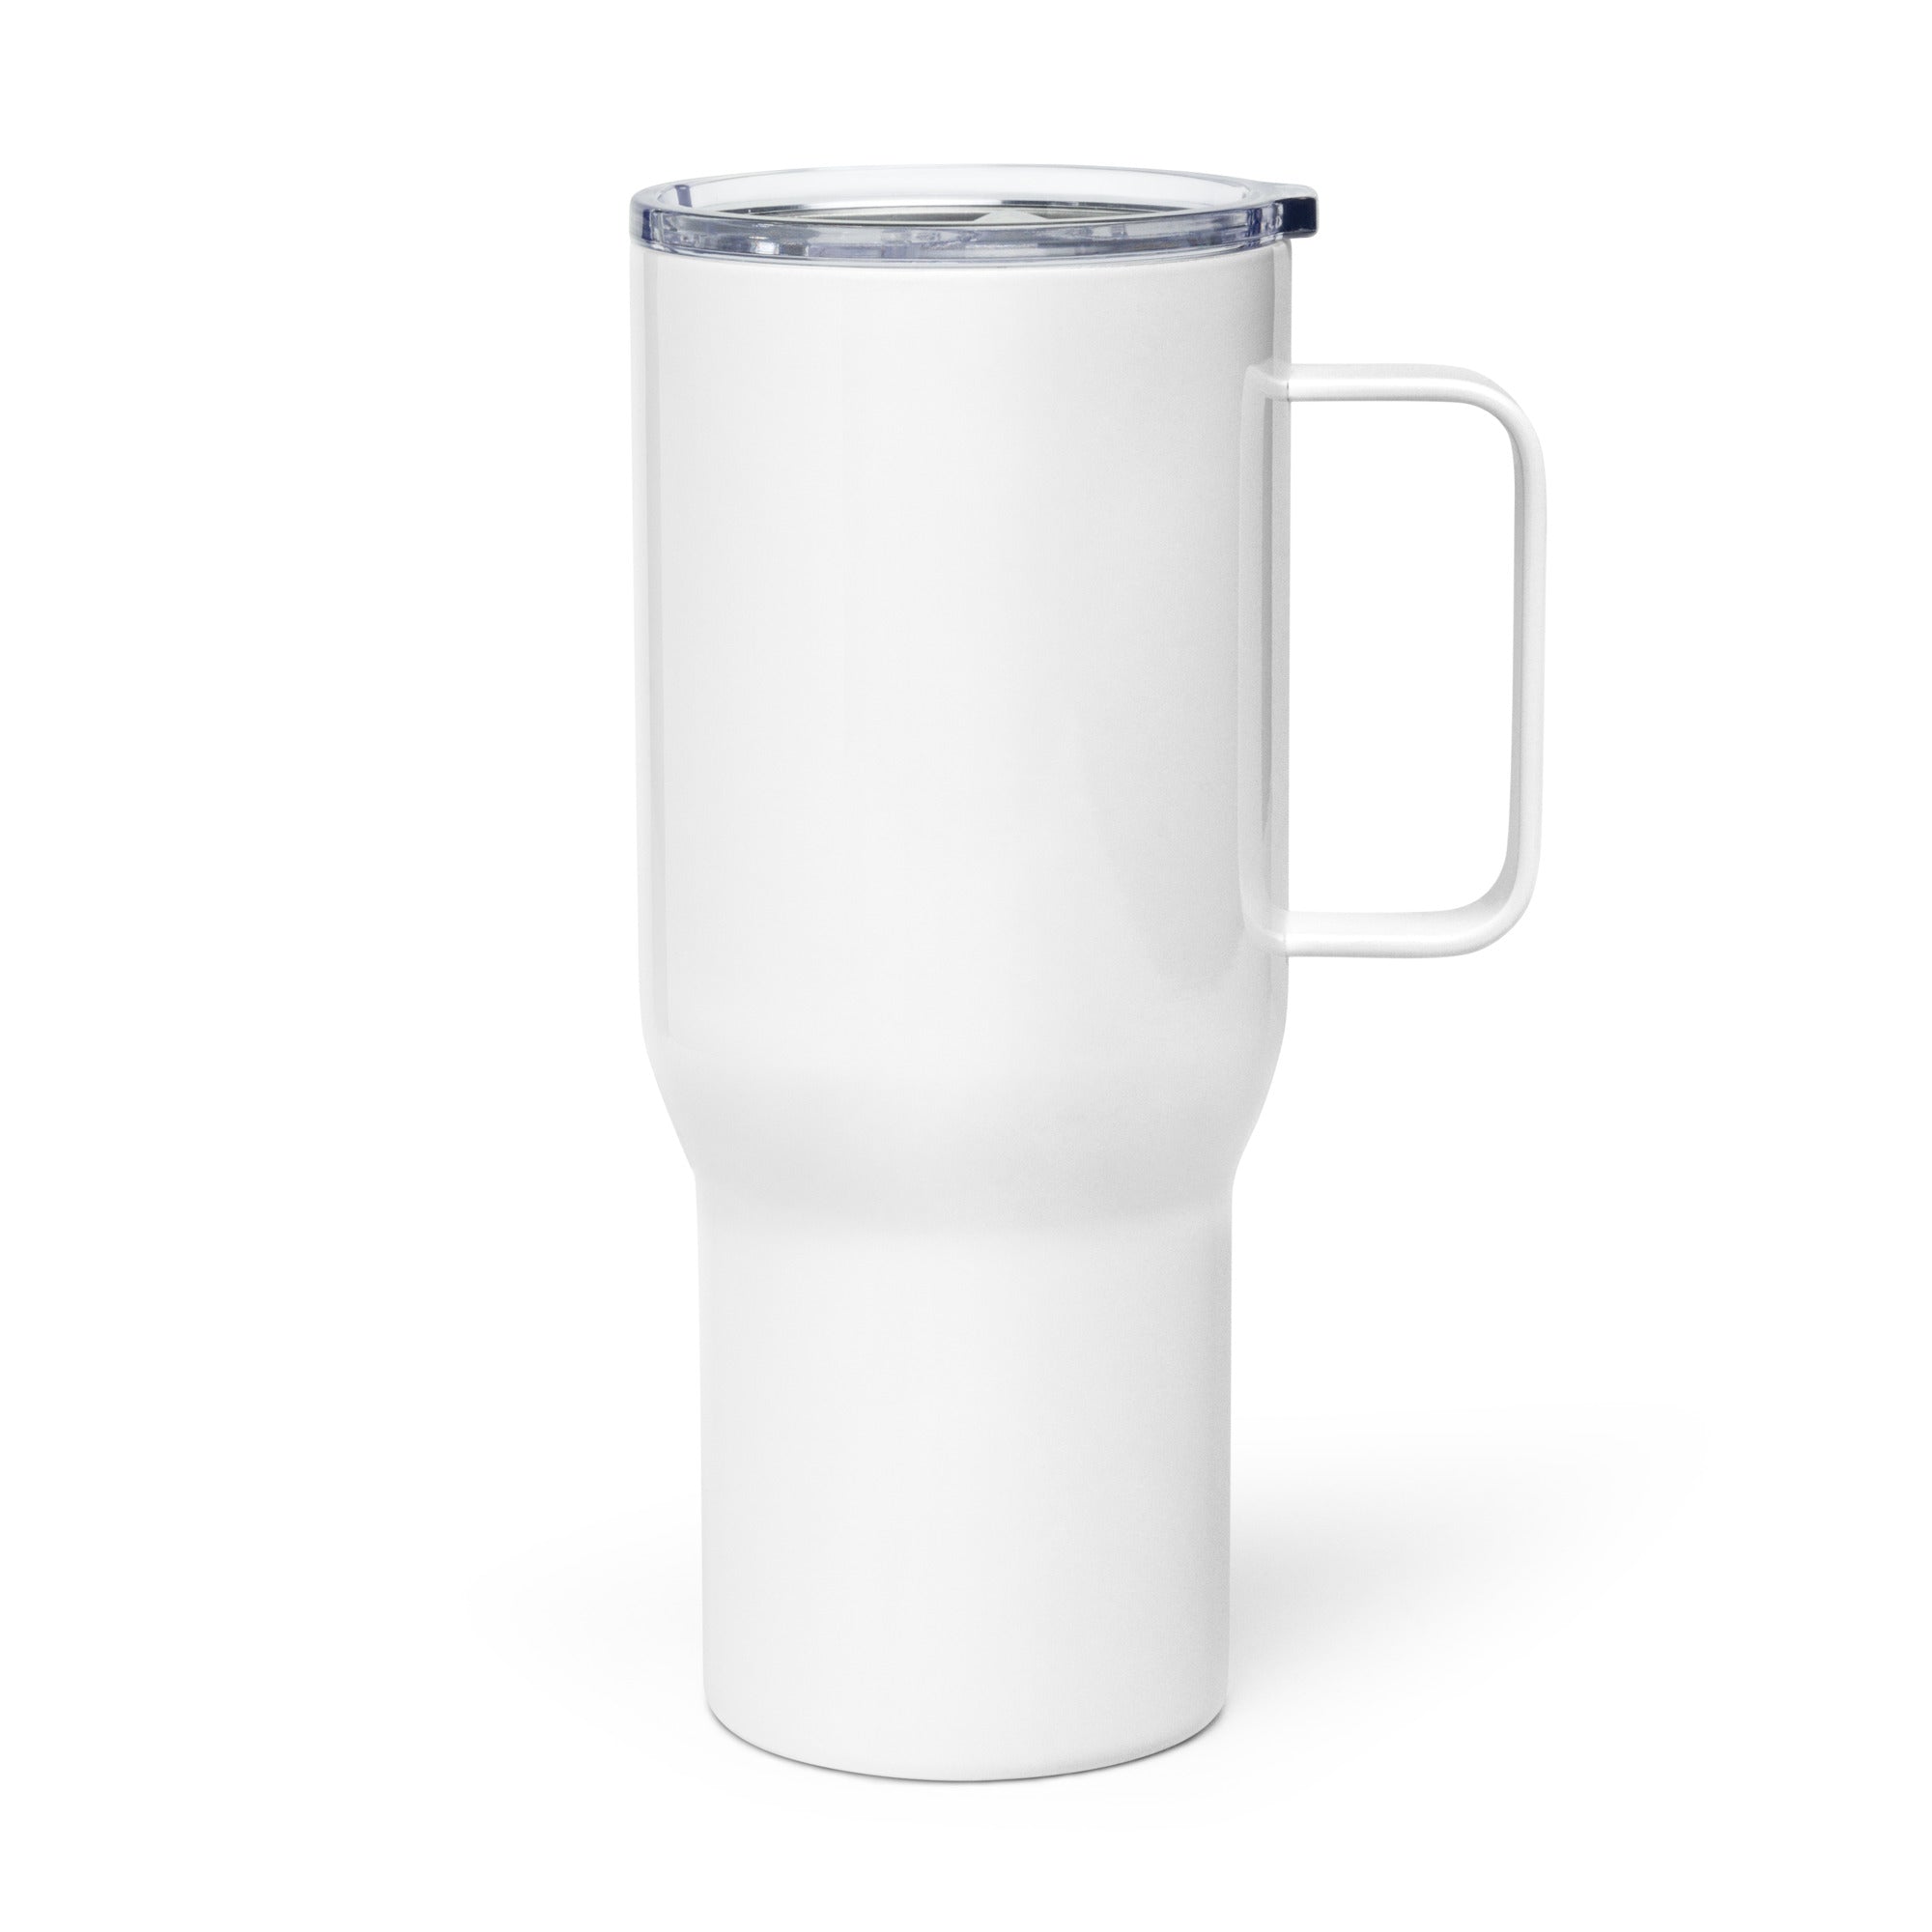 Norwell Travel mug with a handle